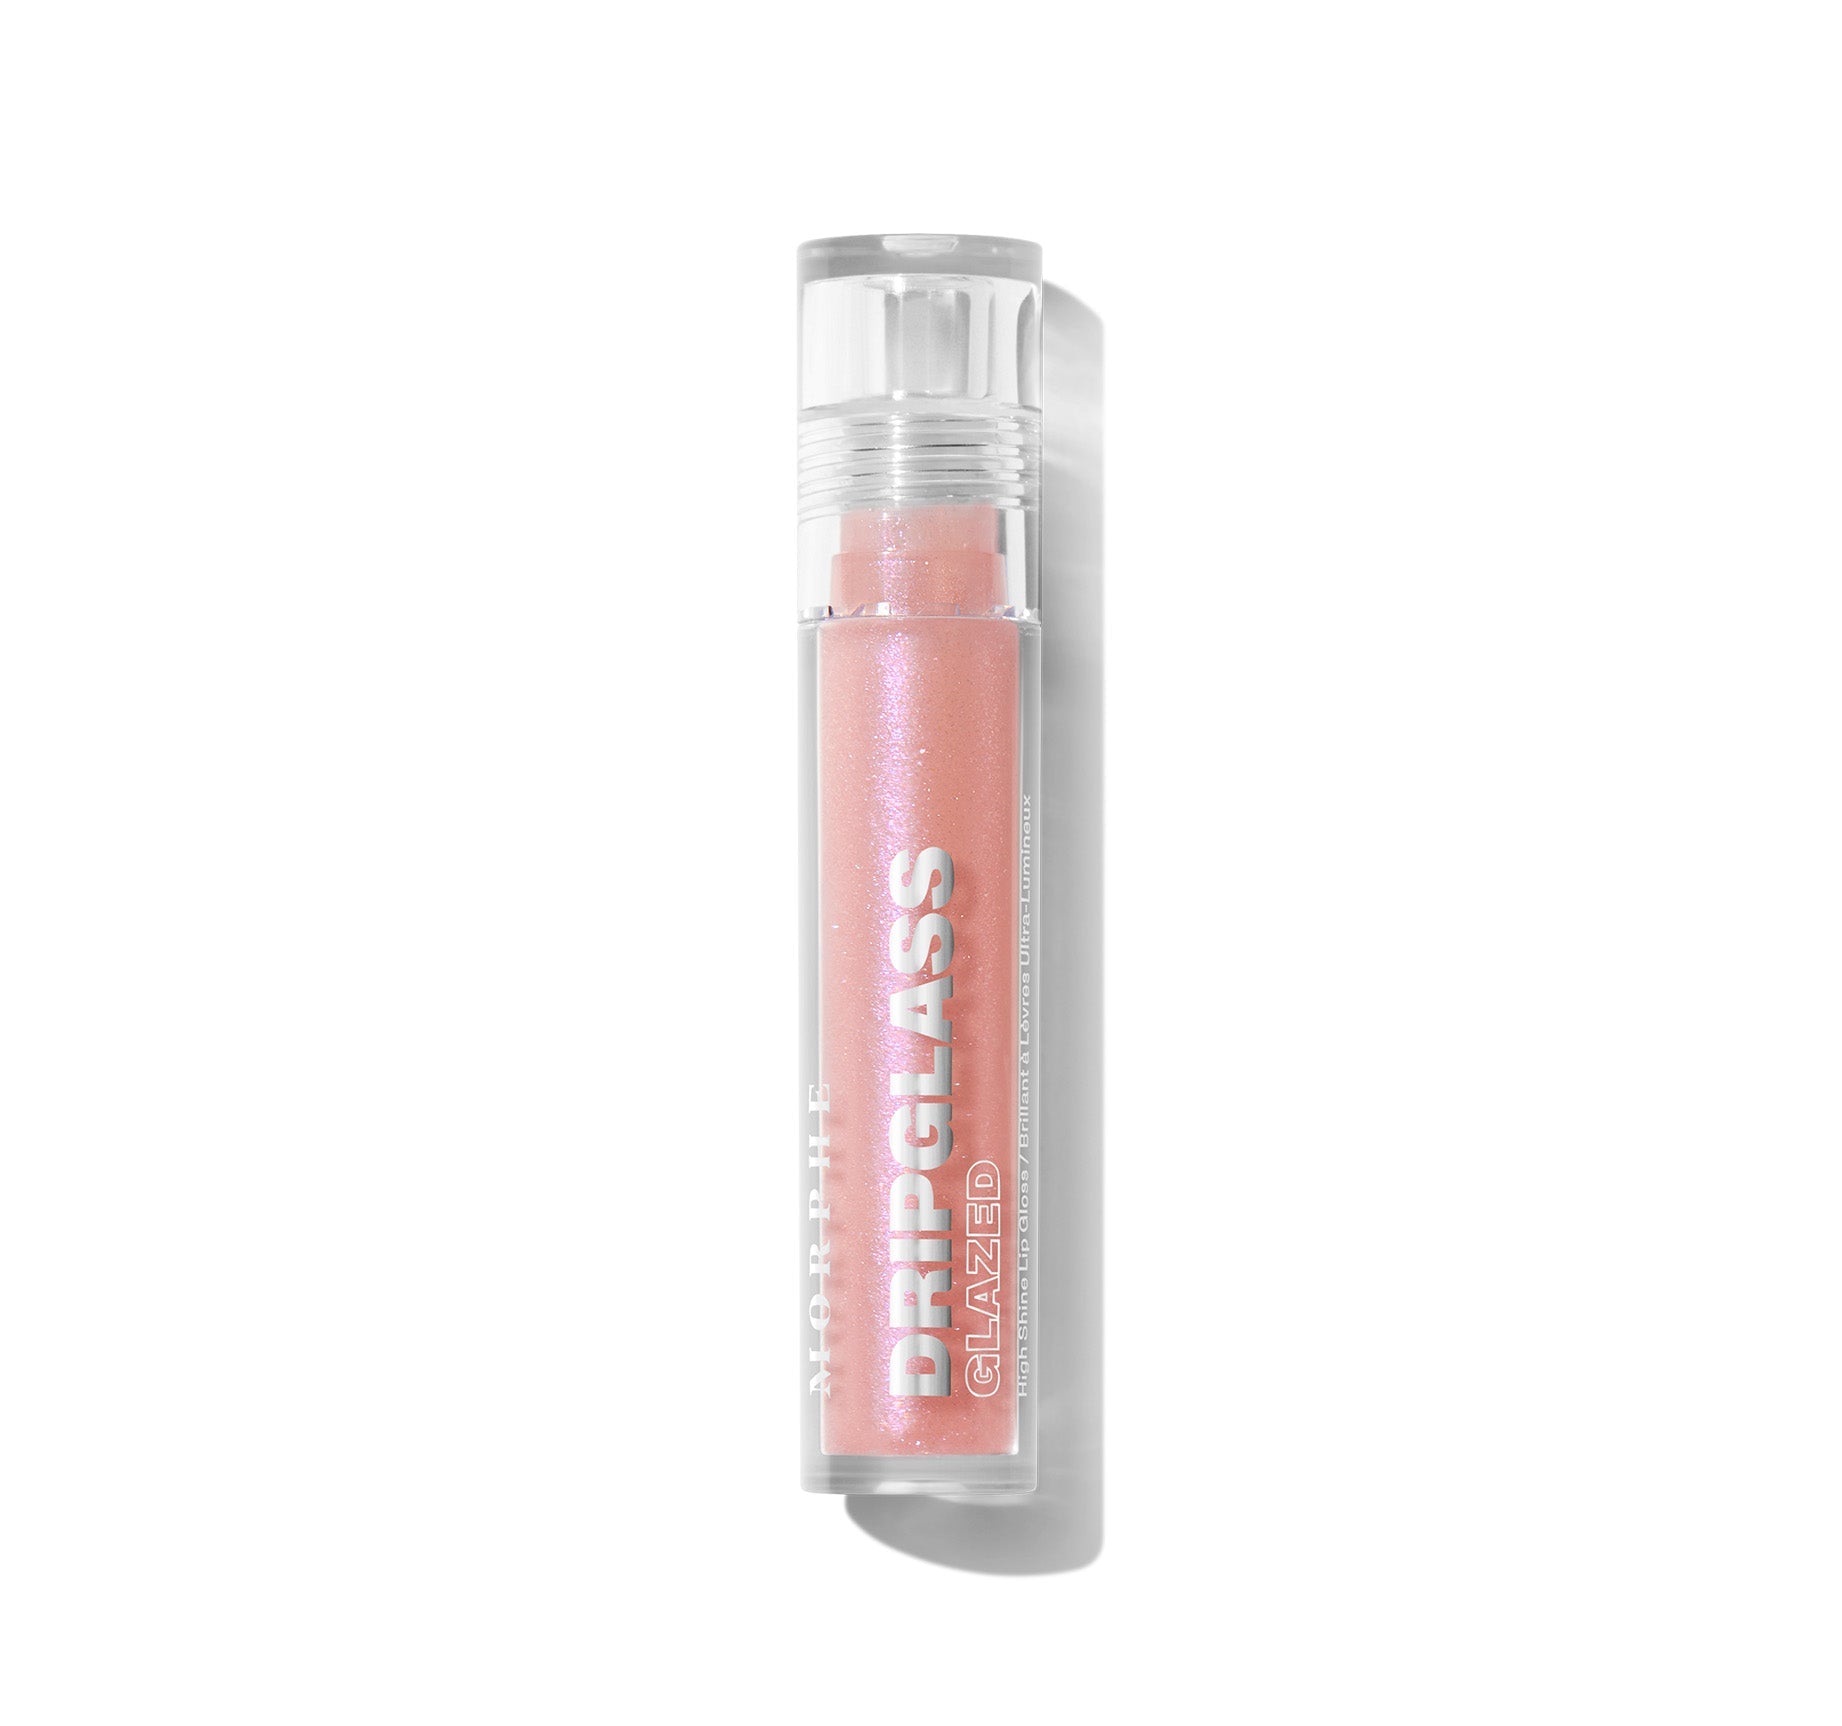 Aurascape Dripglass Glazed Highshine Pearlized Lip Gloss - Frose Bliss - Image 6